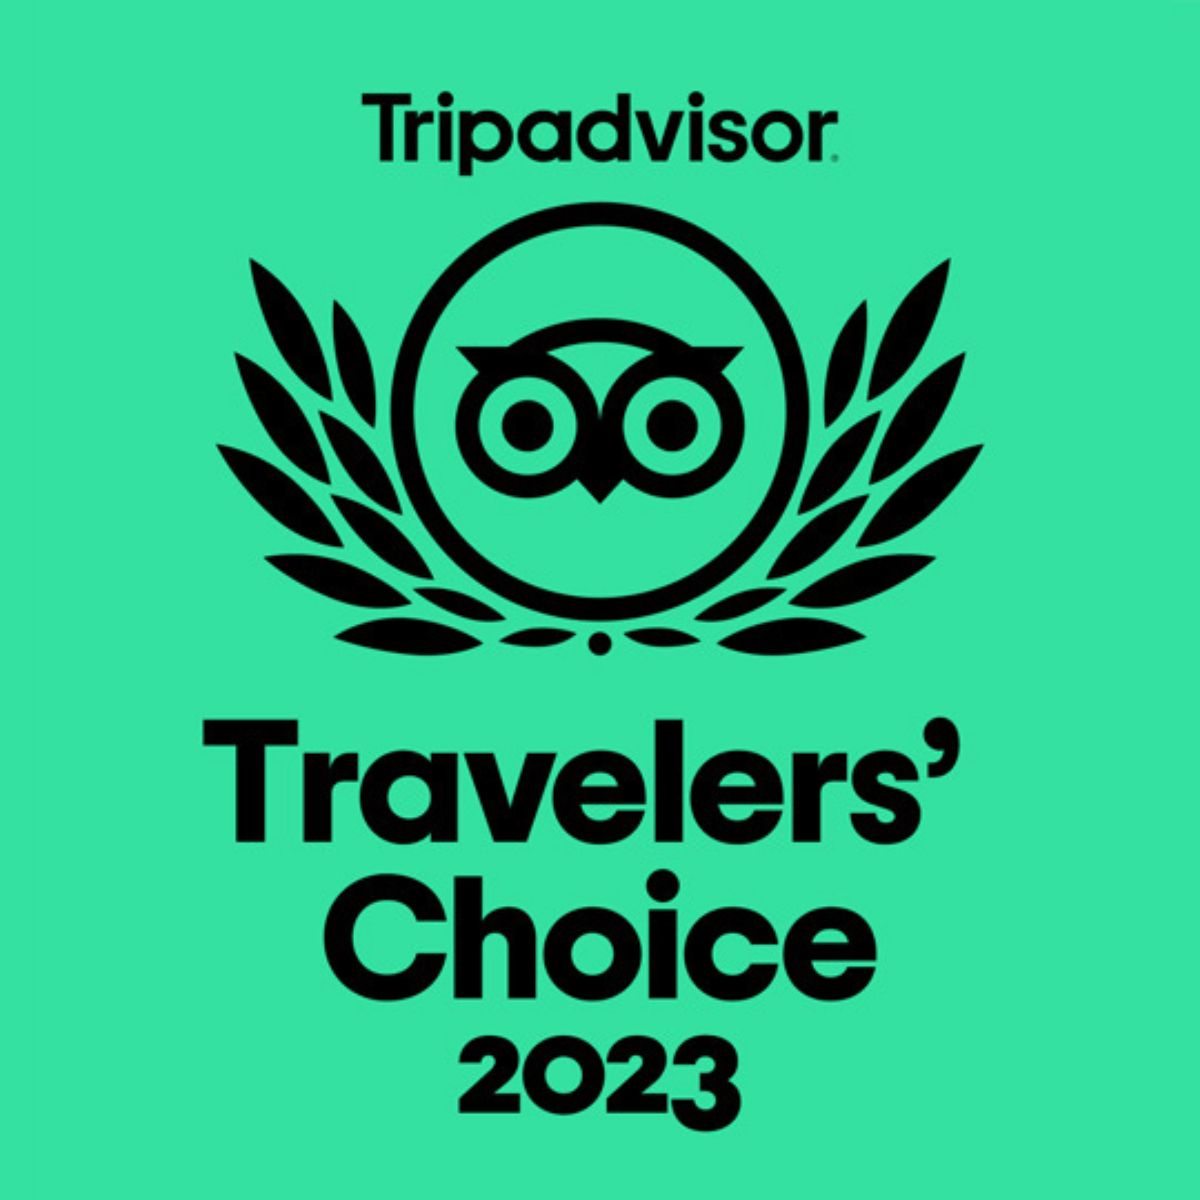 Travelers' Choice Award 2023